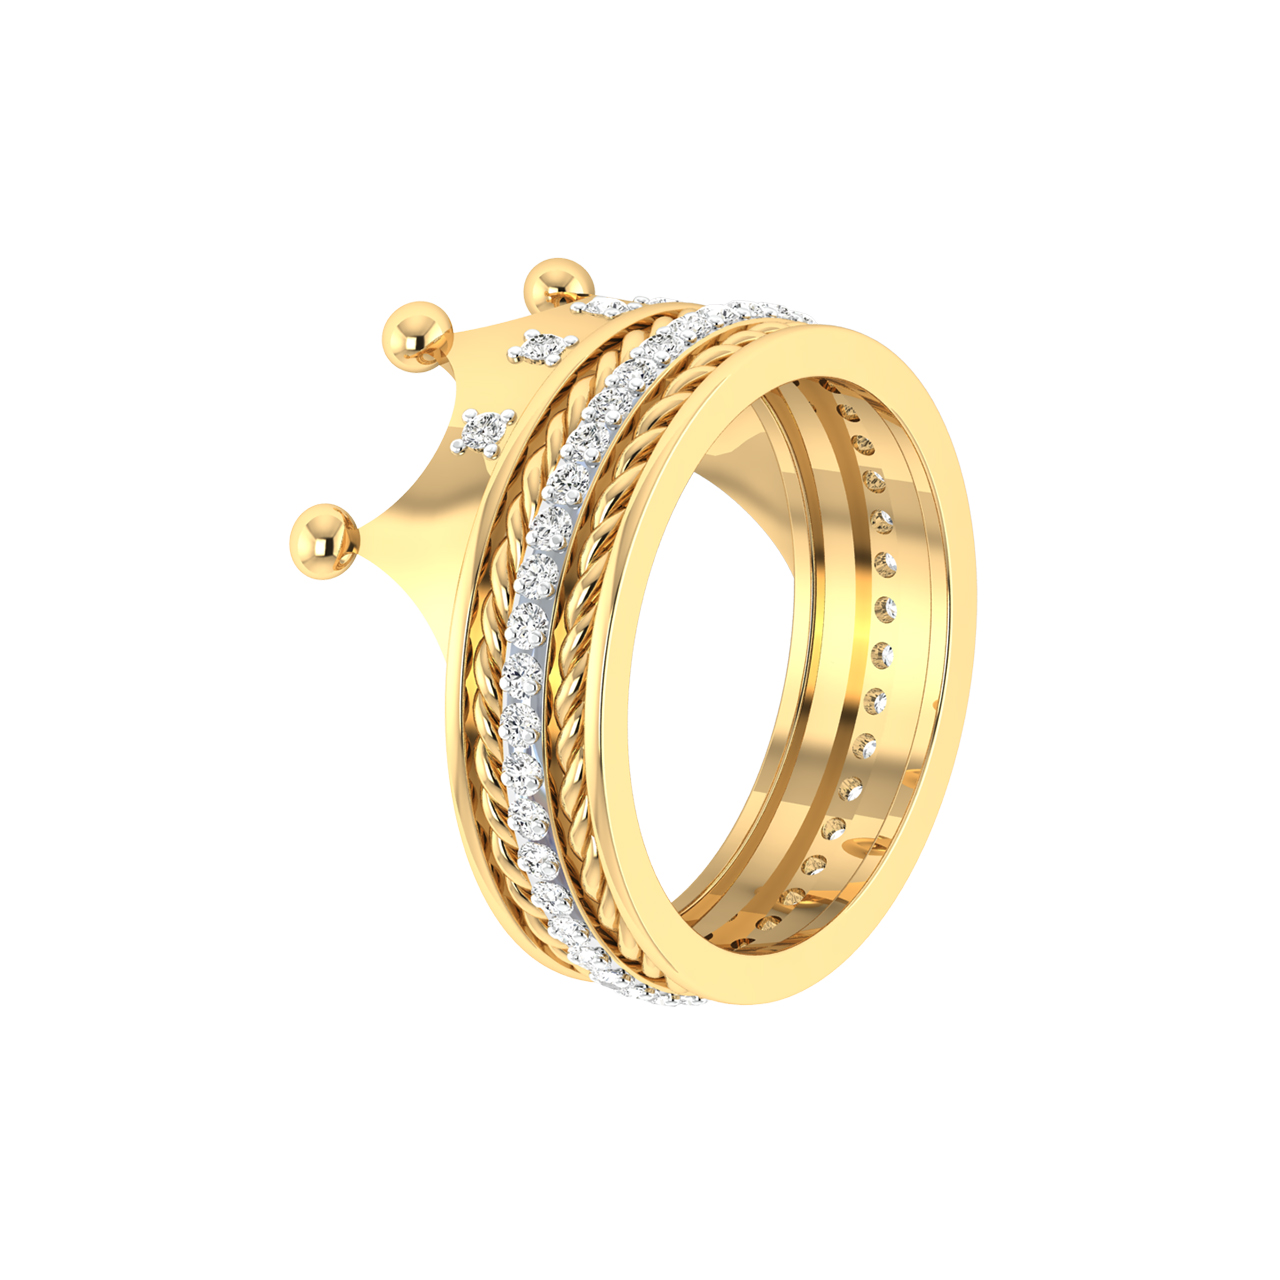 Stylish Men's Ring in 22K Yellow Gold - MRG-609